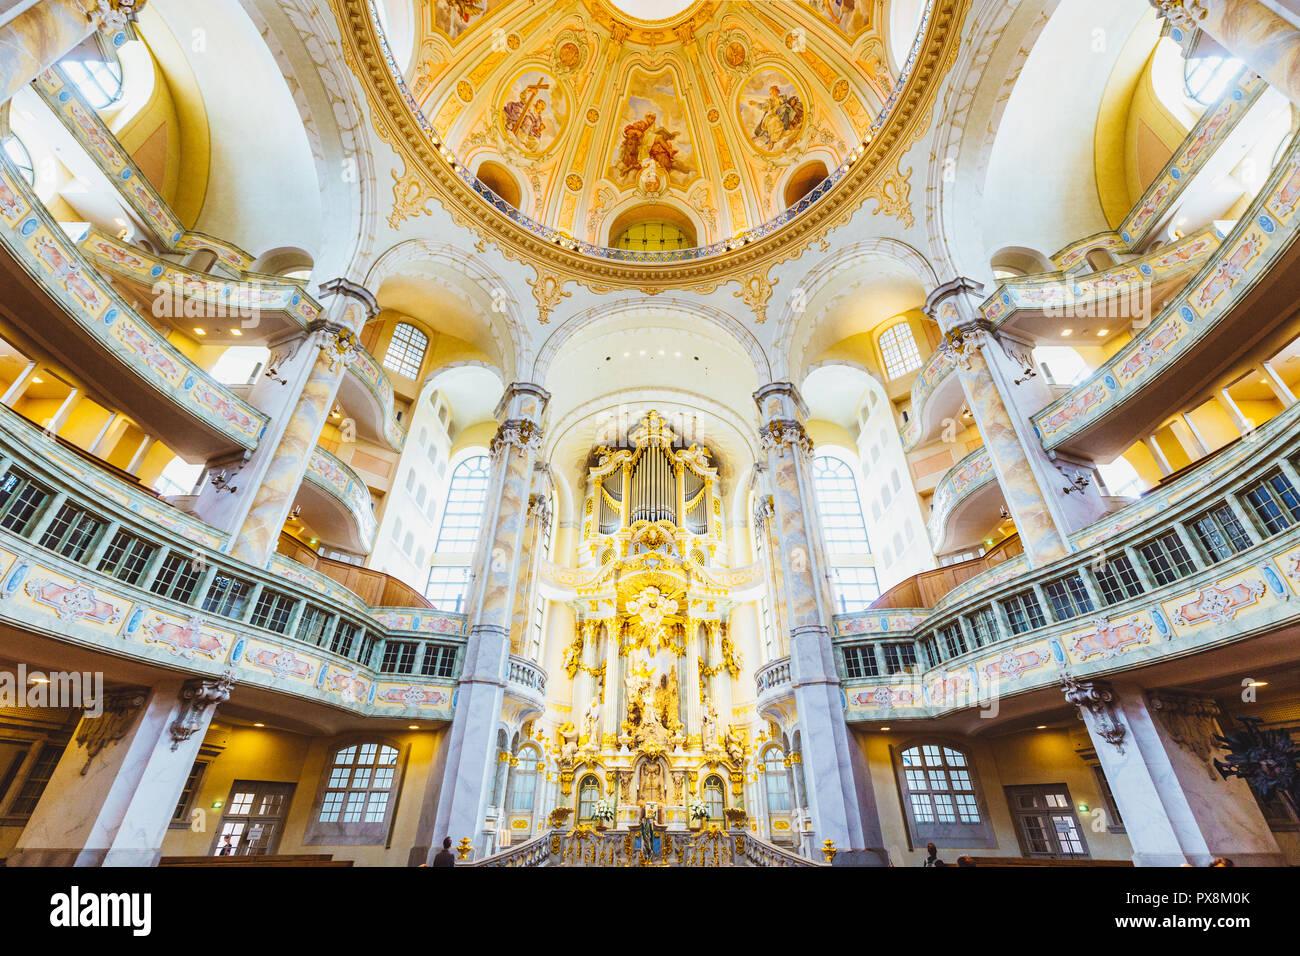 amplio-angulo-de-vision-interior-de-la-famosa-iglesia-frauenkirche-de-dresde-dresde-sajonia-alemania-px8m0k